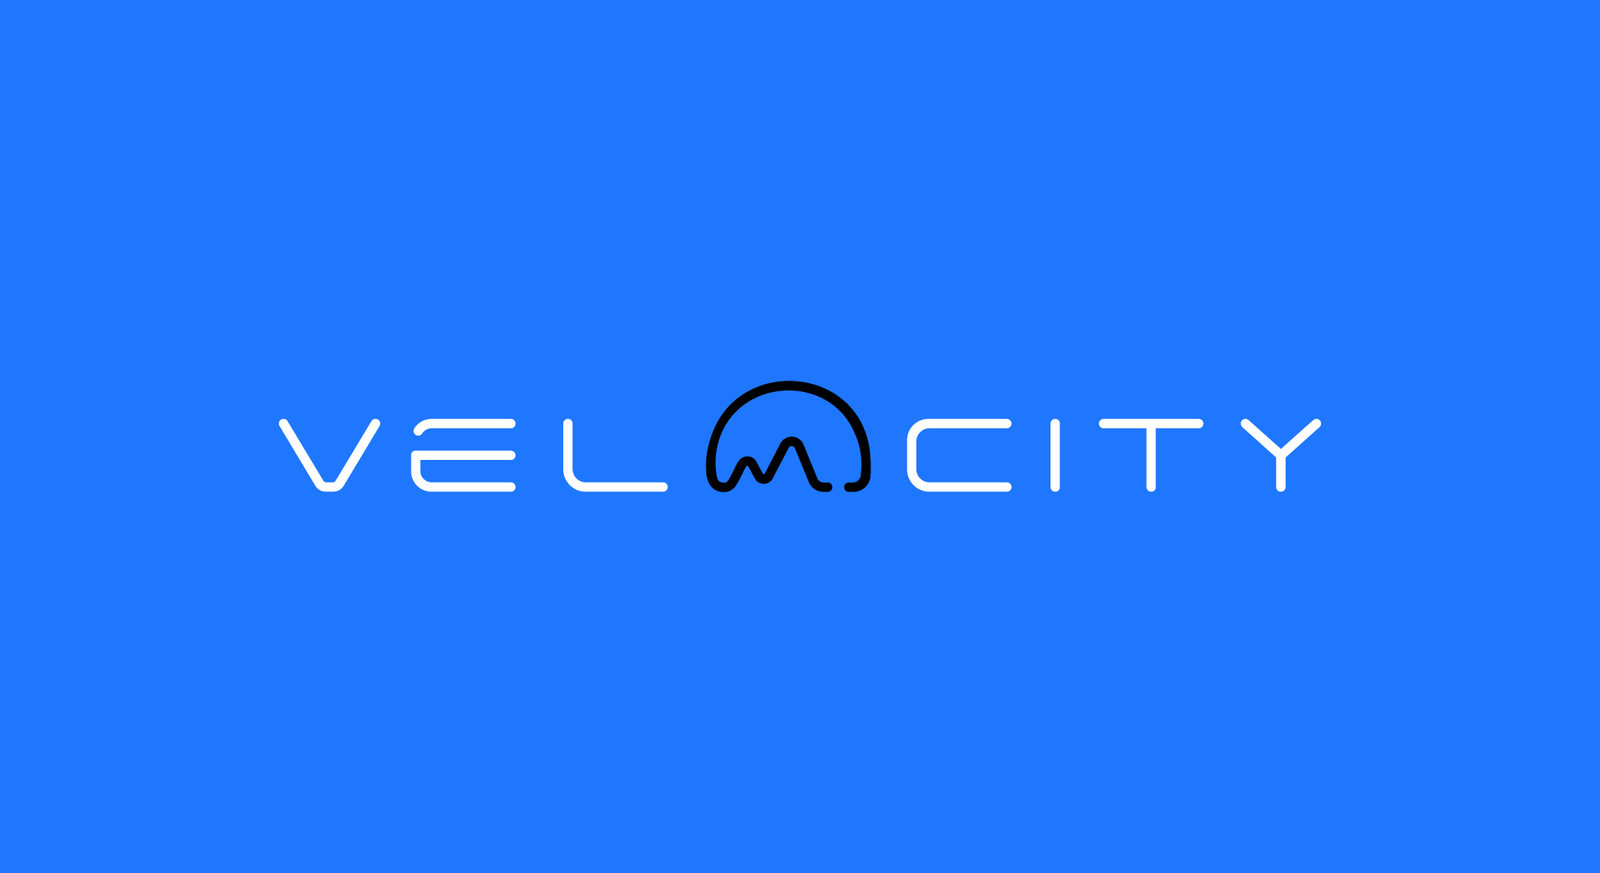 velocity fitness and wellness app logo design